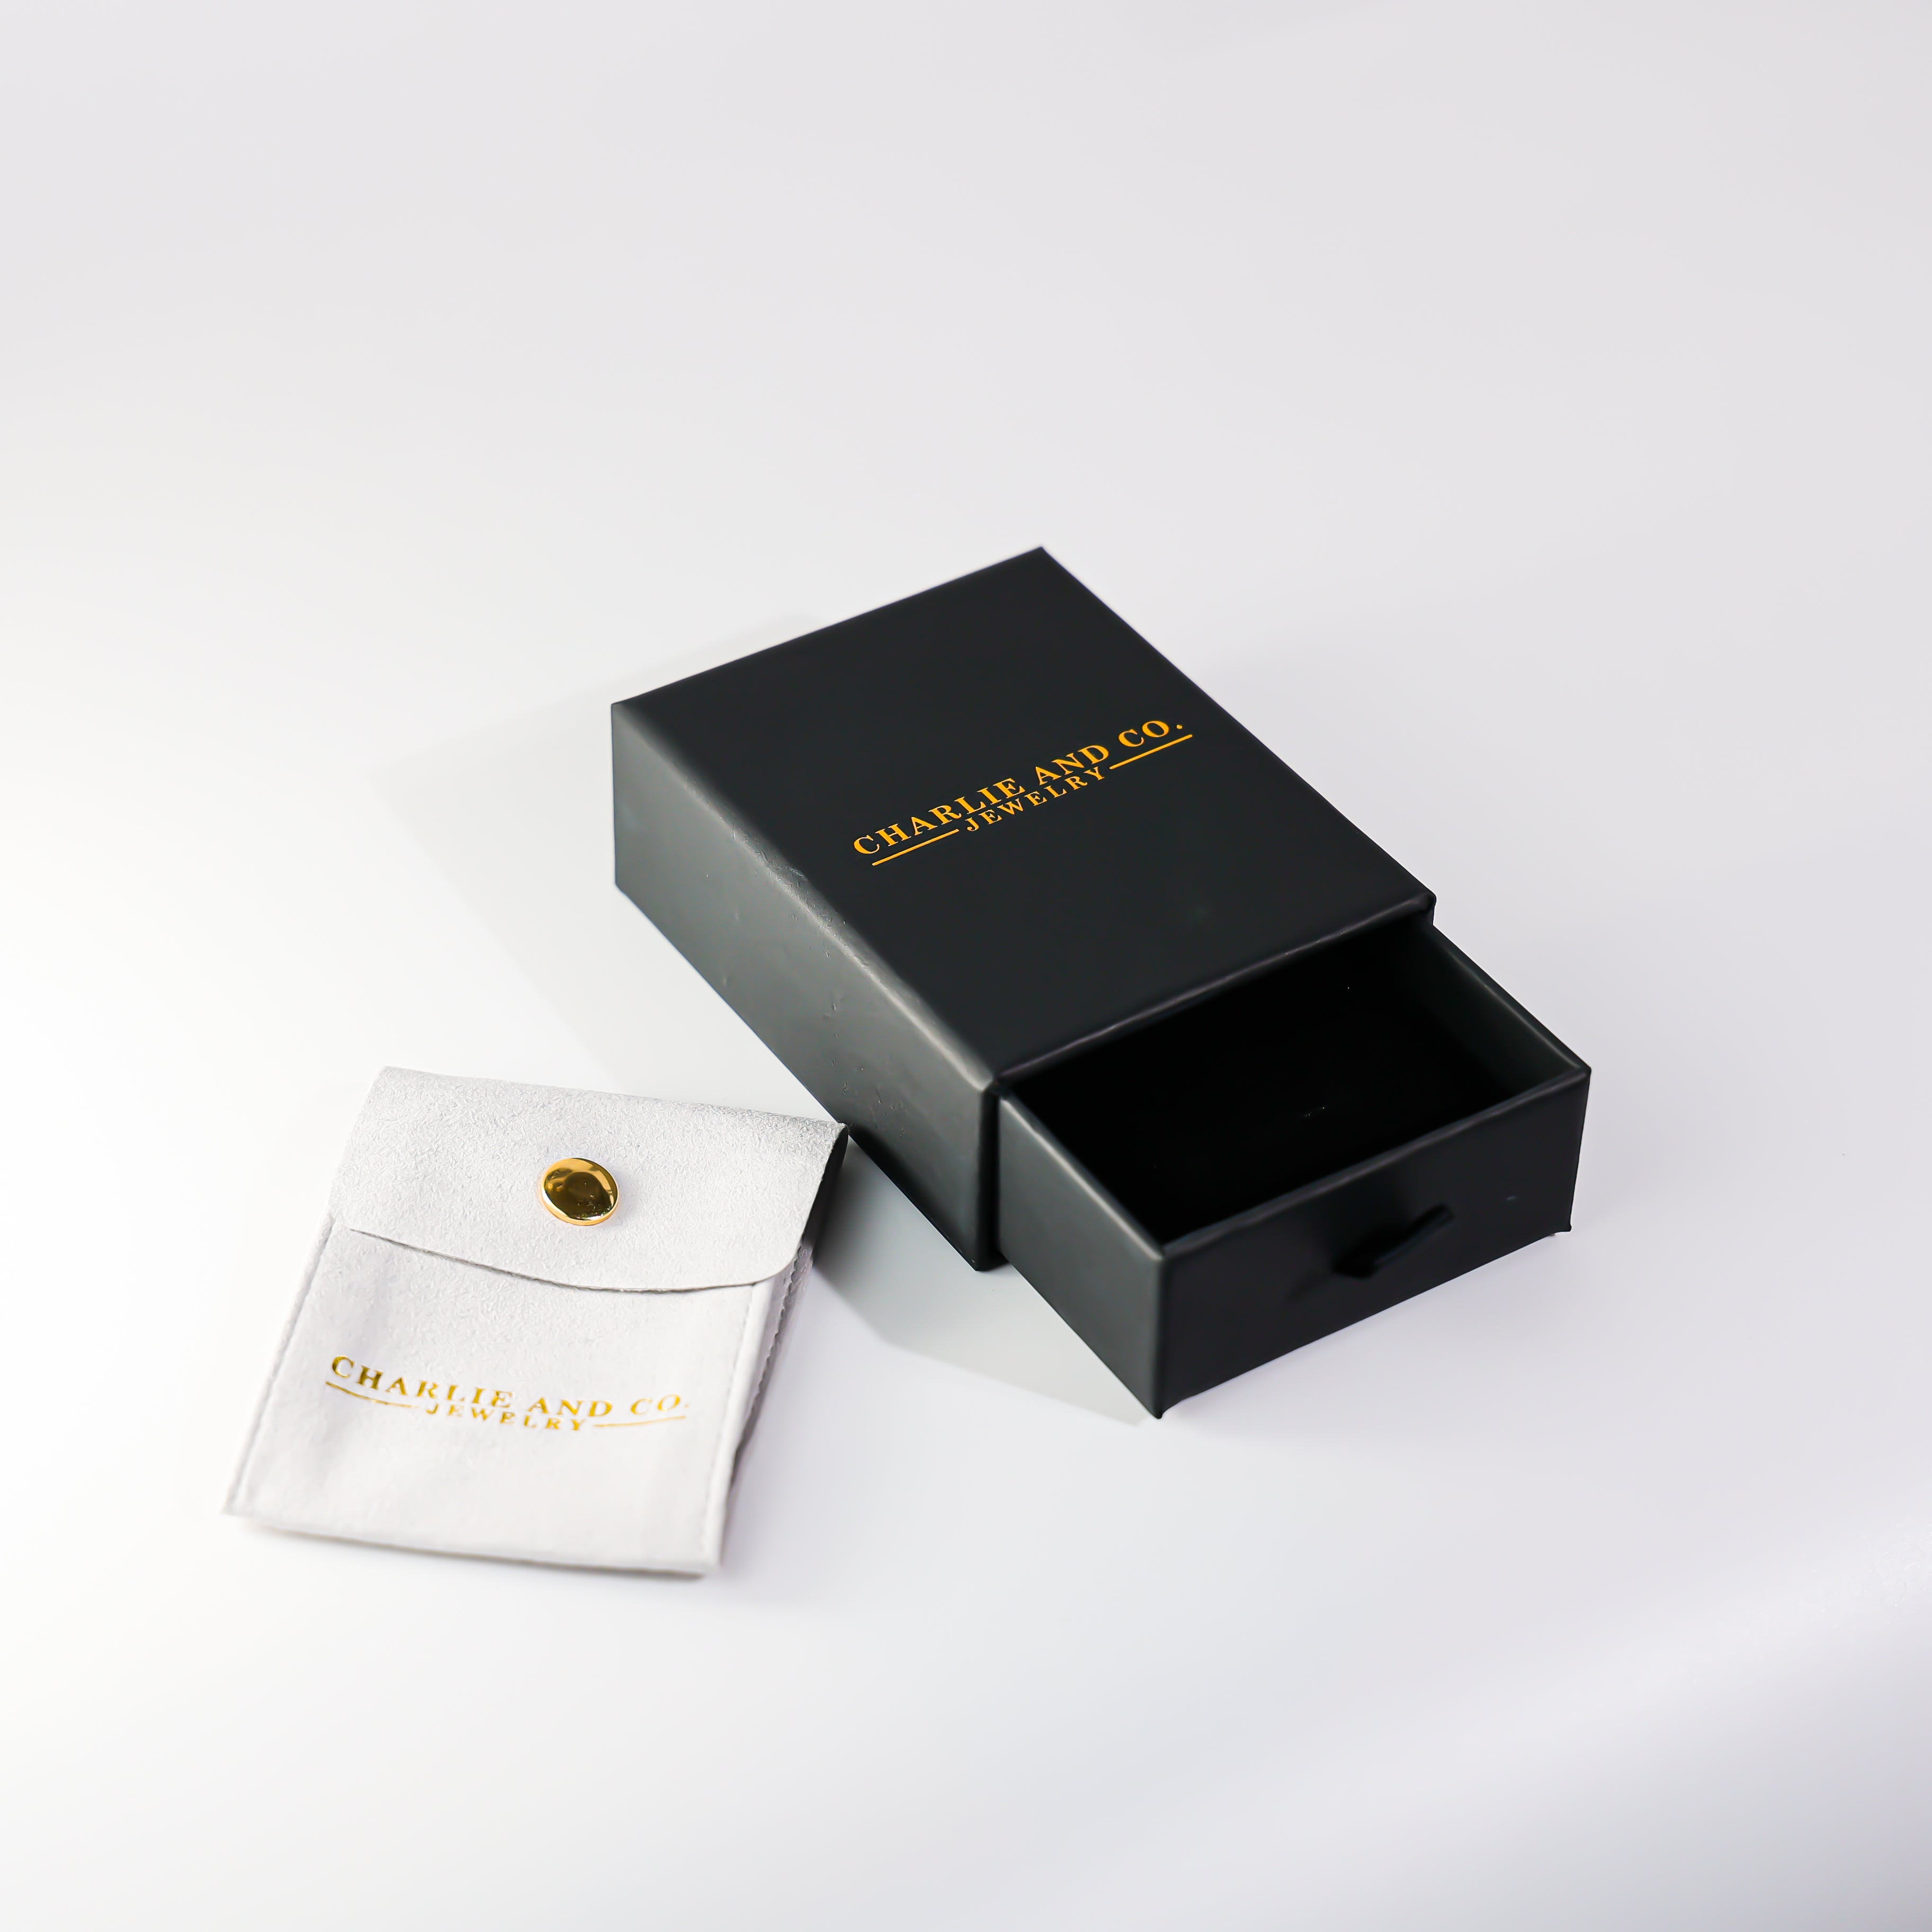 14K Gold Girl November Birthstone Garnet Charm Pendant - Charlie & Co. Jewelry